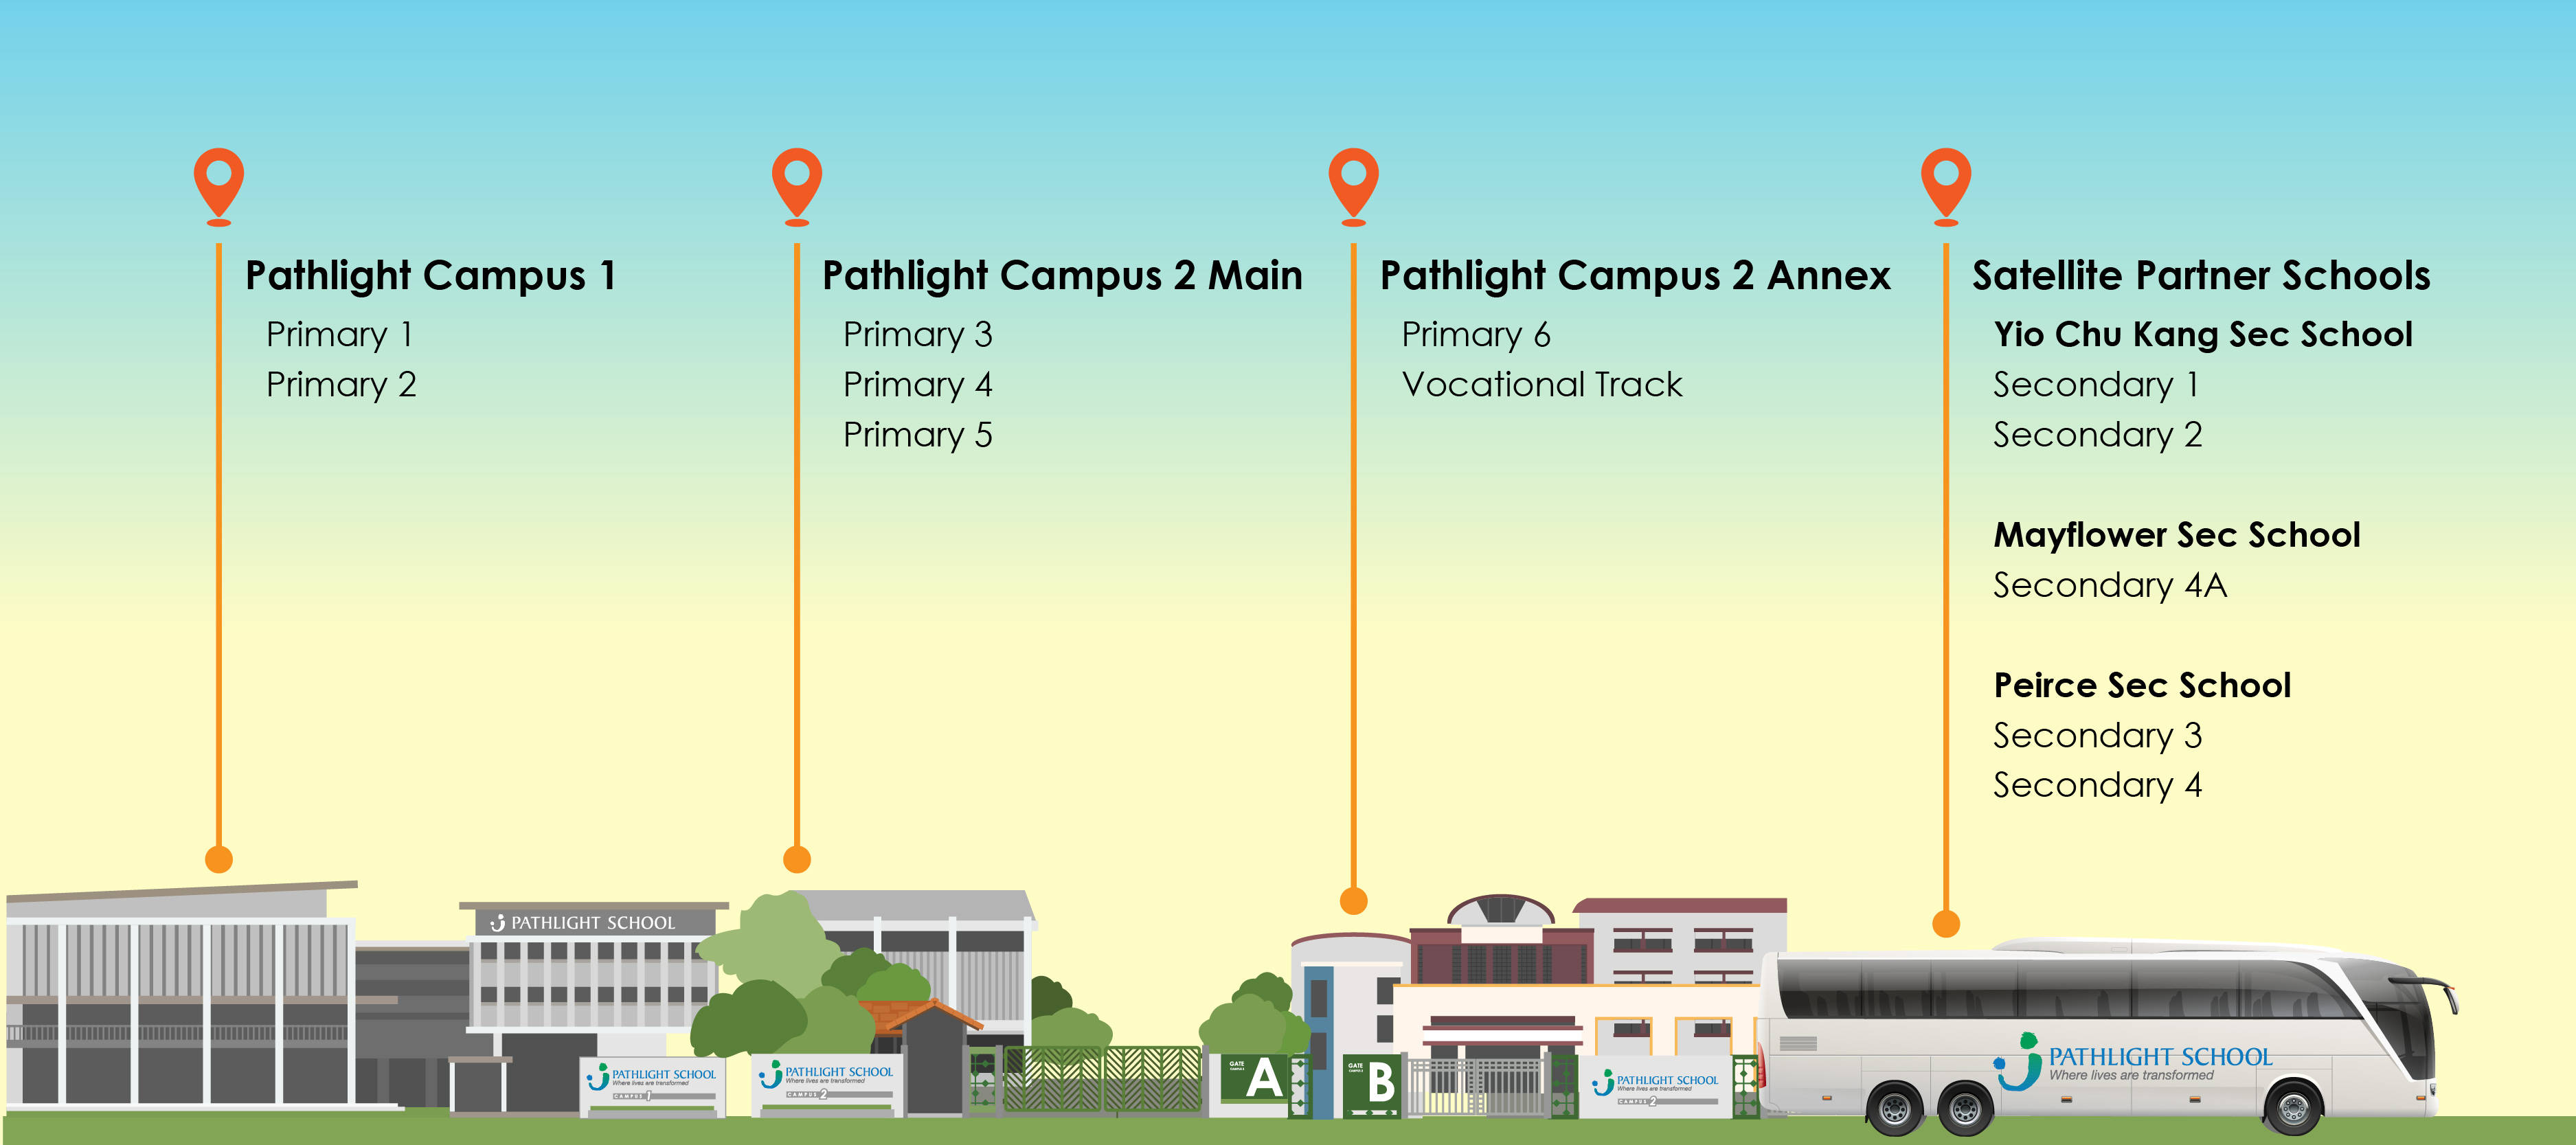 Pathlight Campuses and Satellite Partner Schools